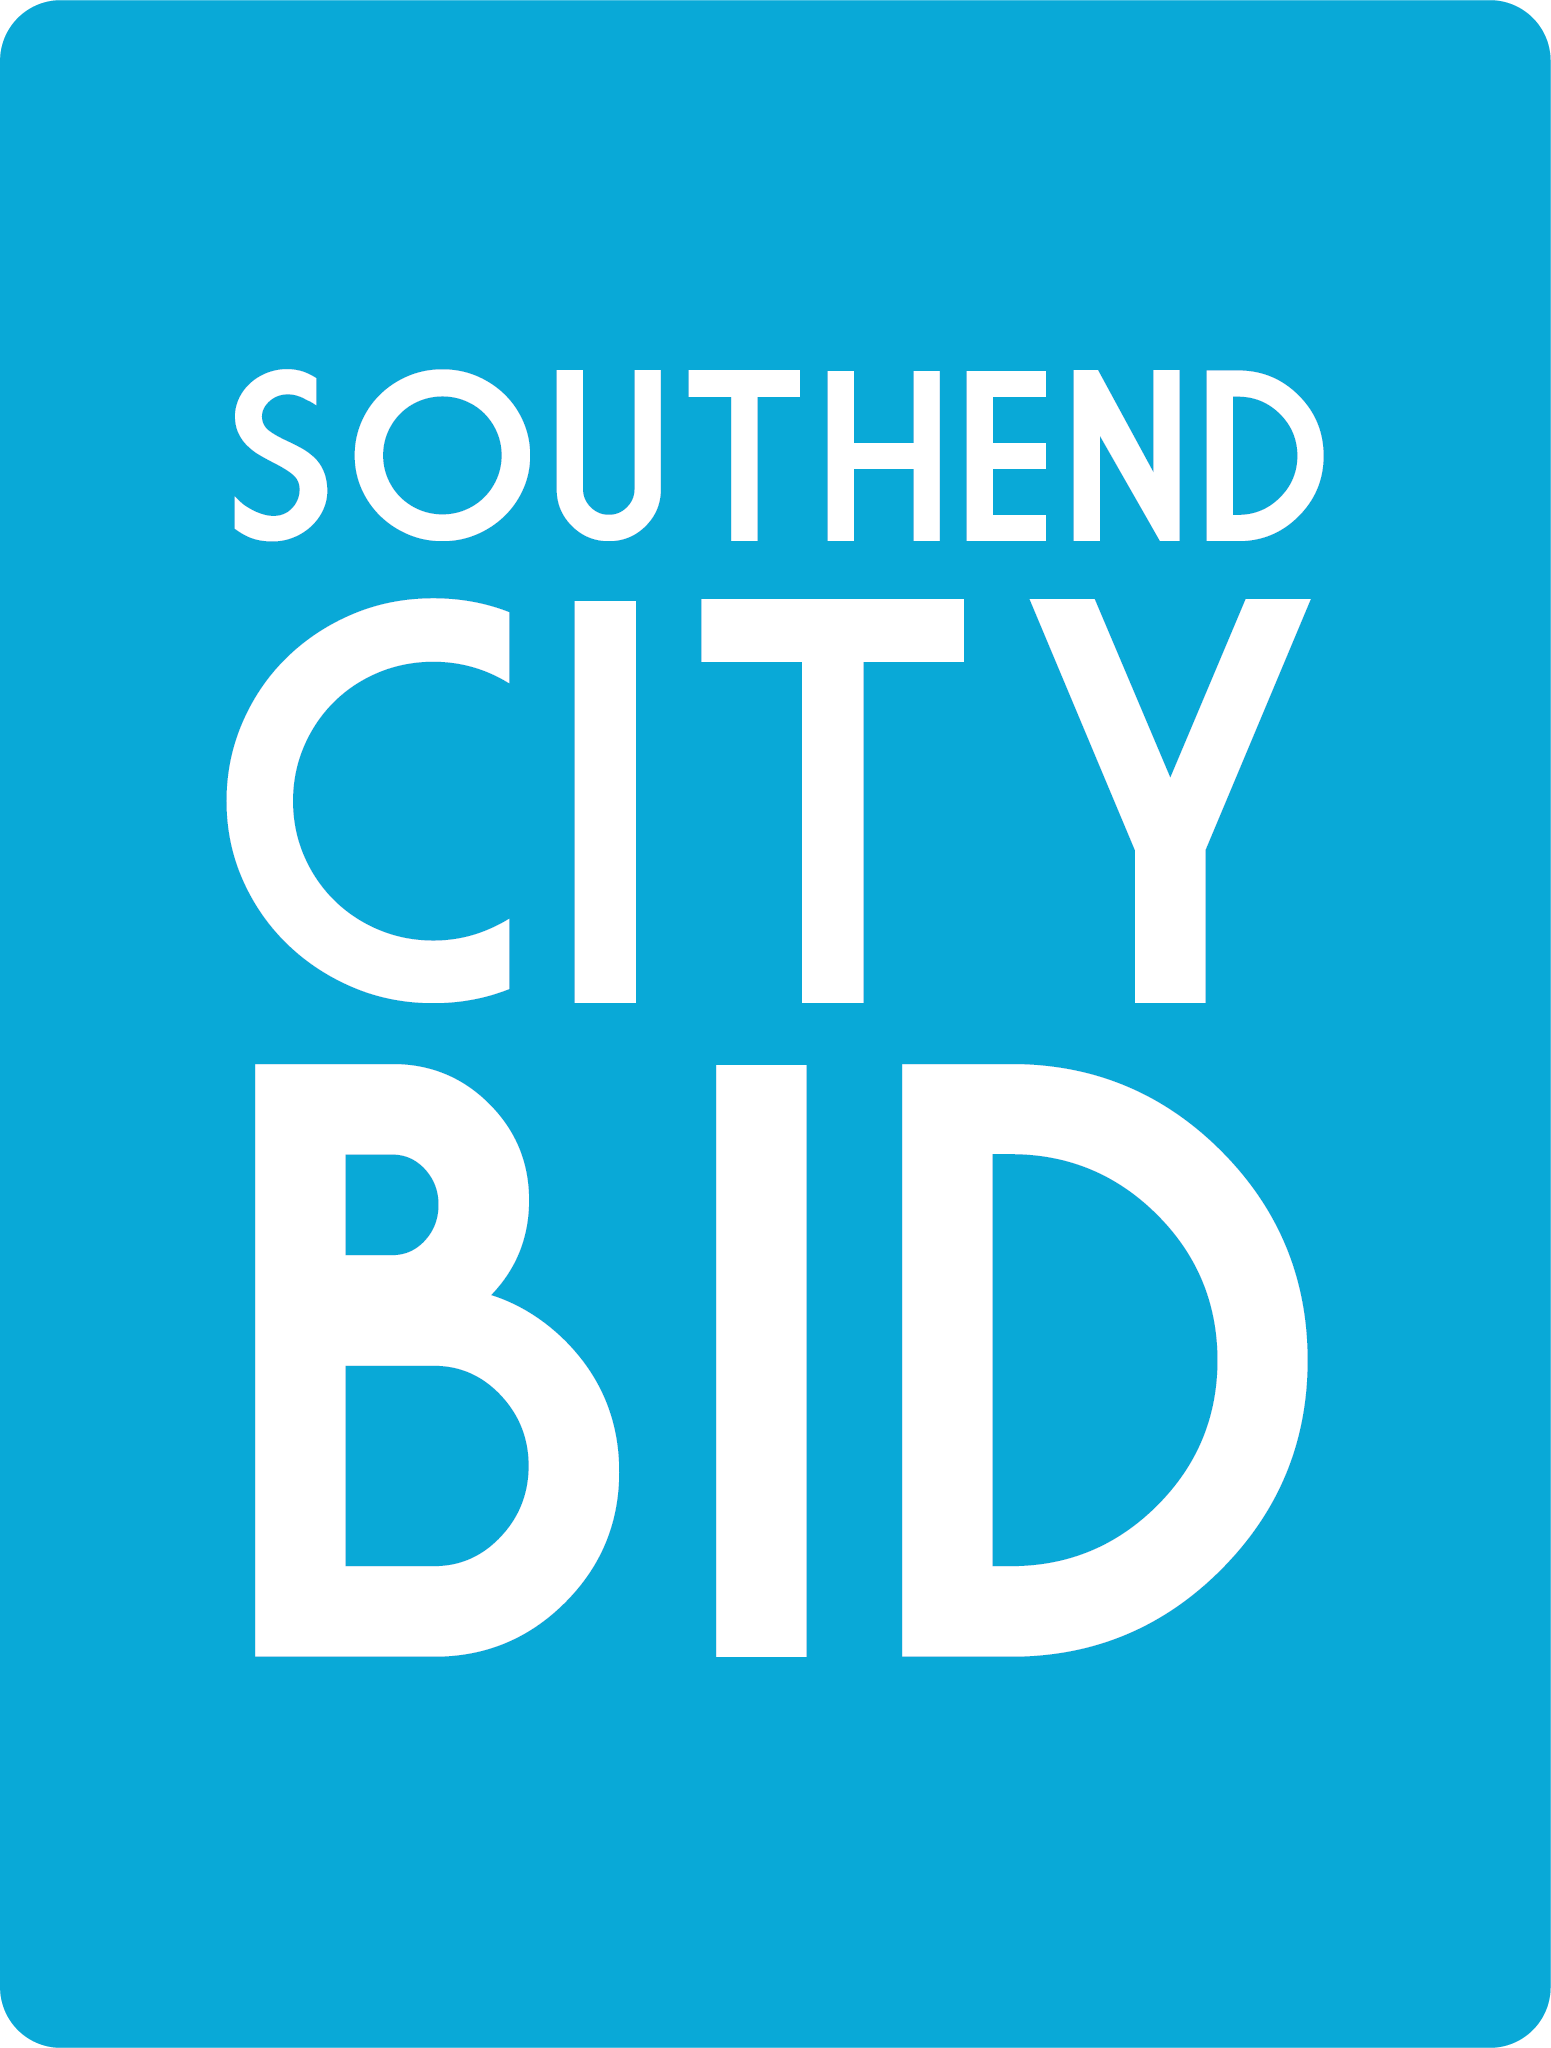 Southend City BID logo. White text on a light blue background